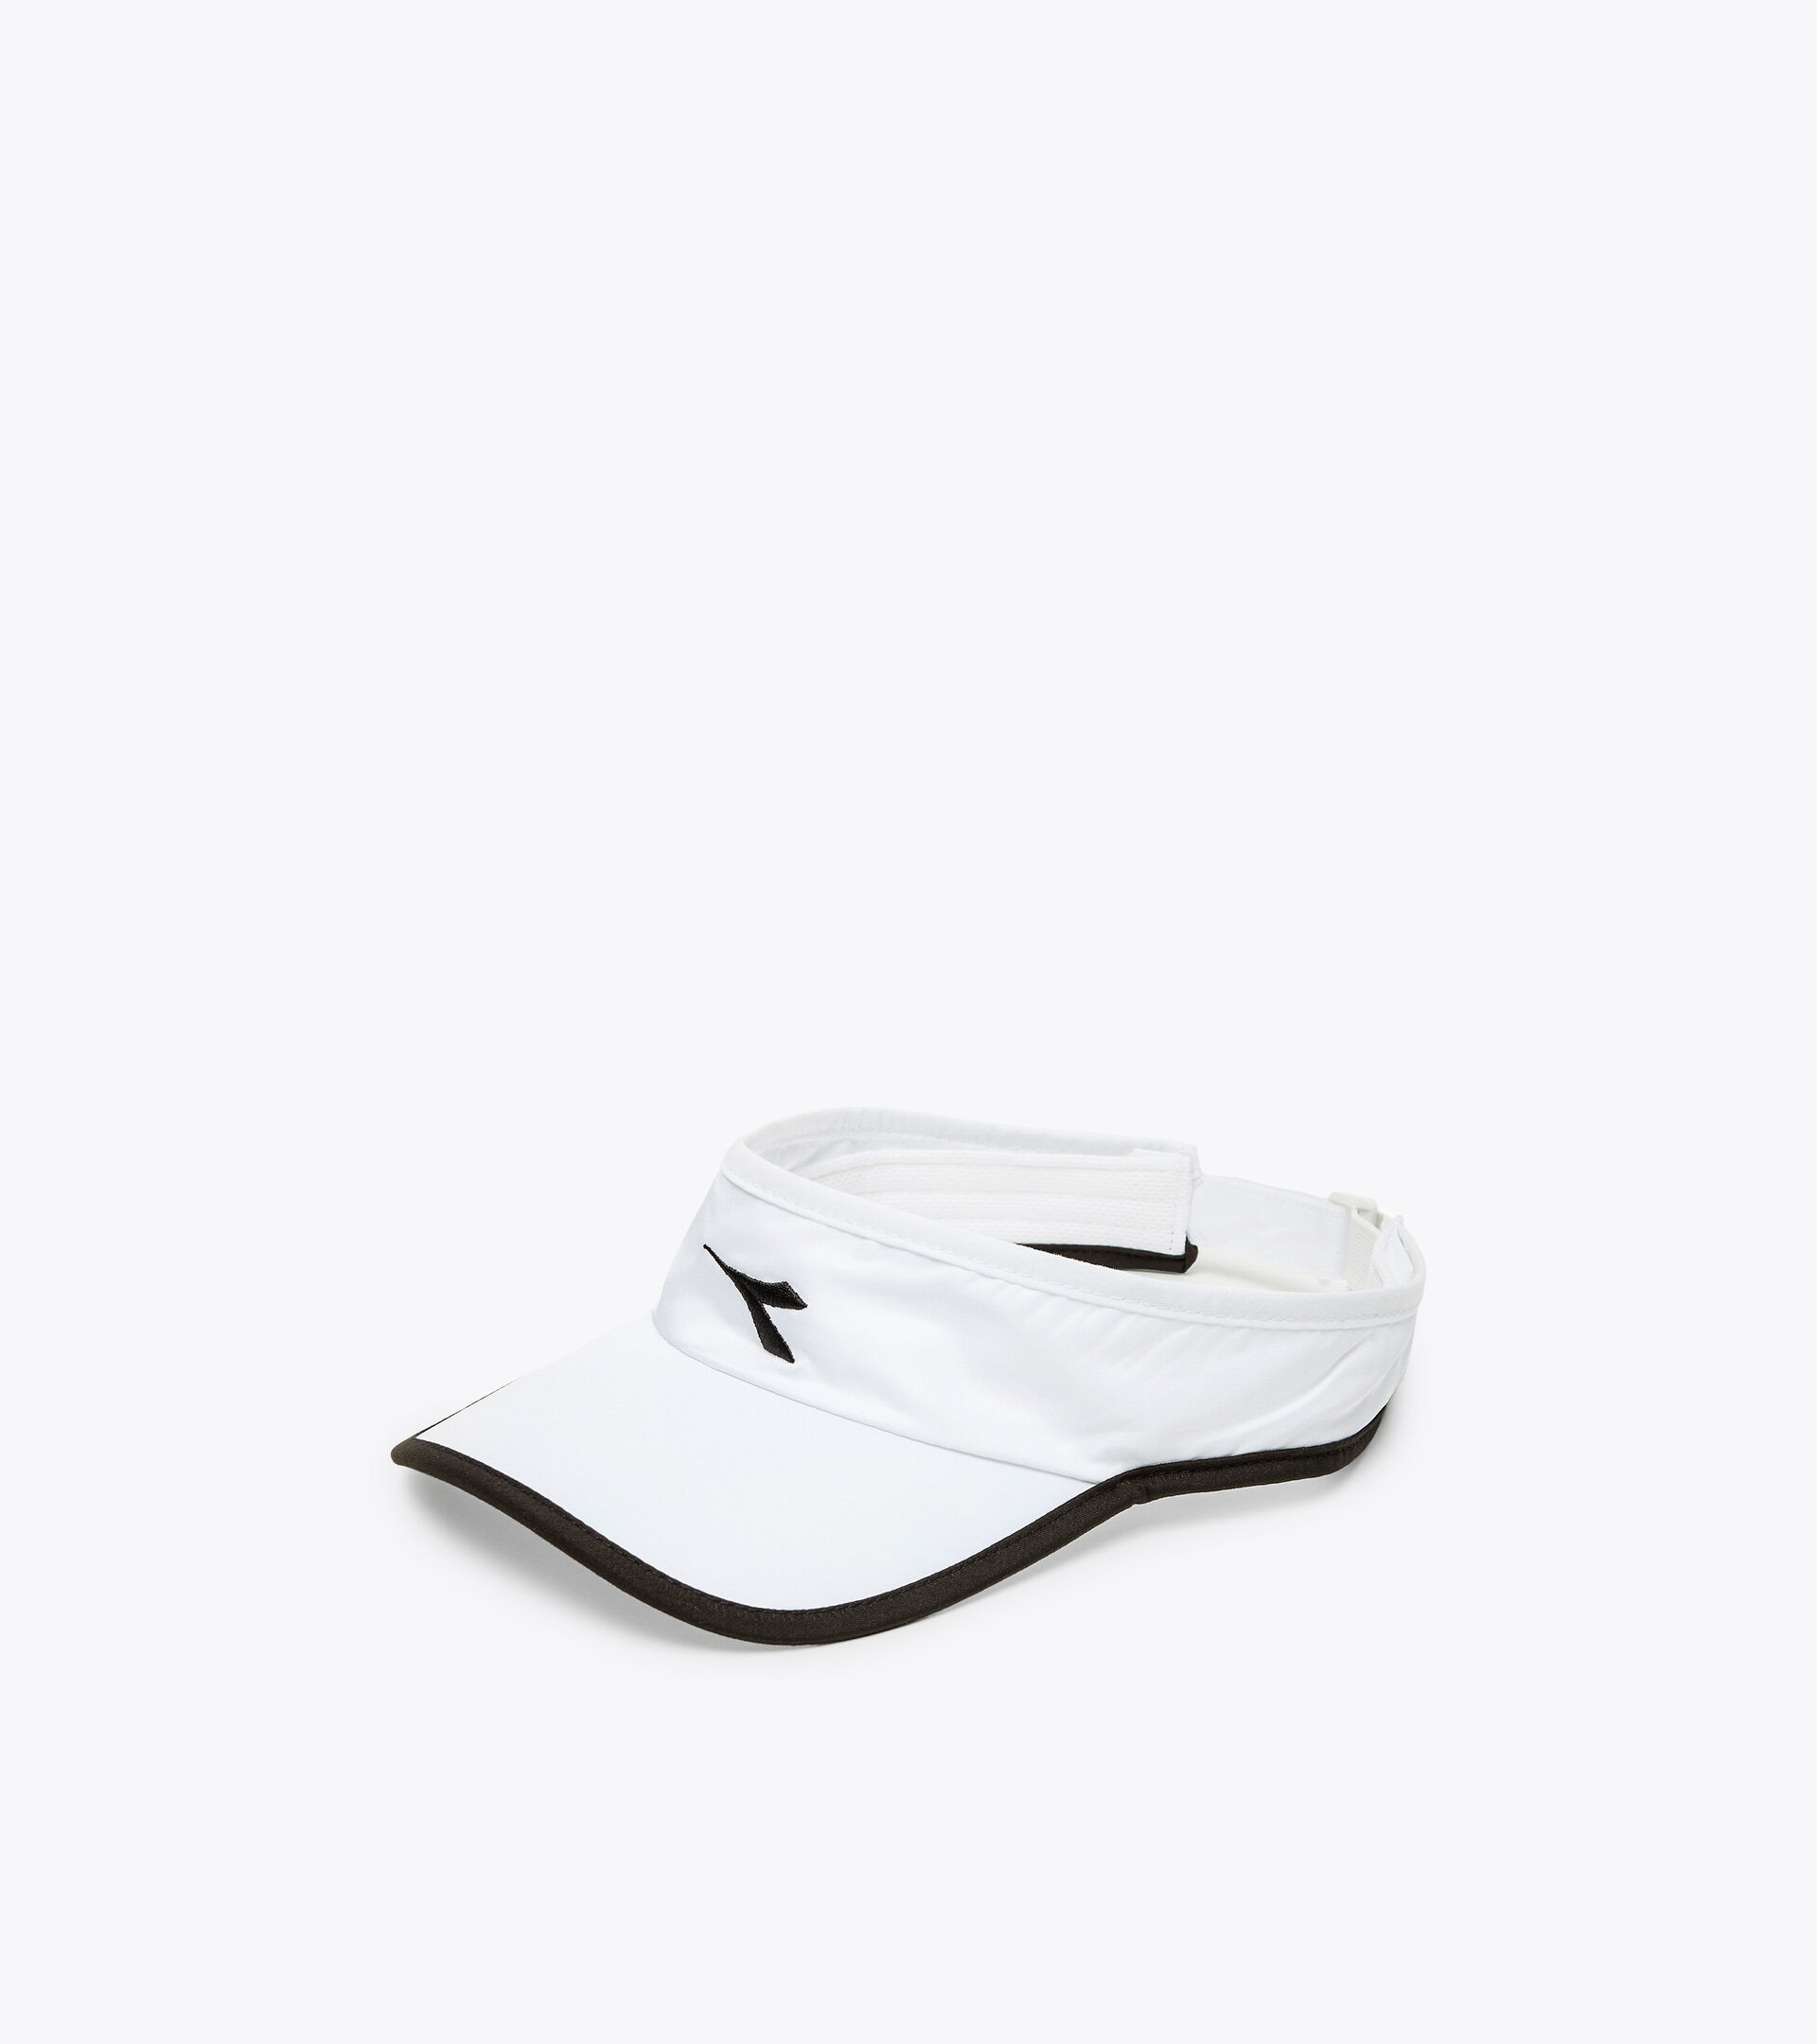 Tennis visor - Unisex VISOR WHITE/BLACK - Diadora